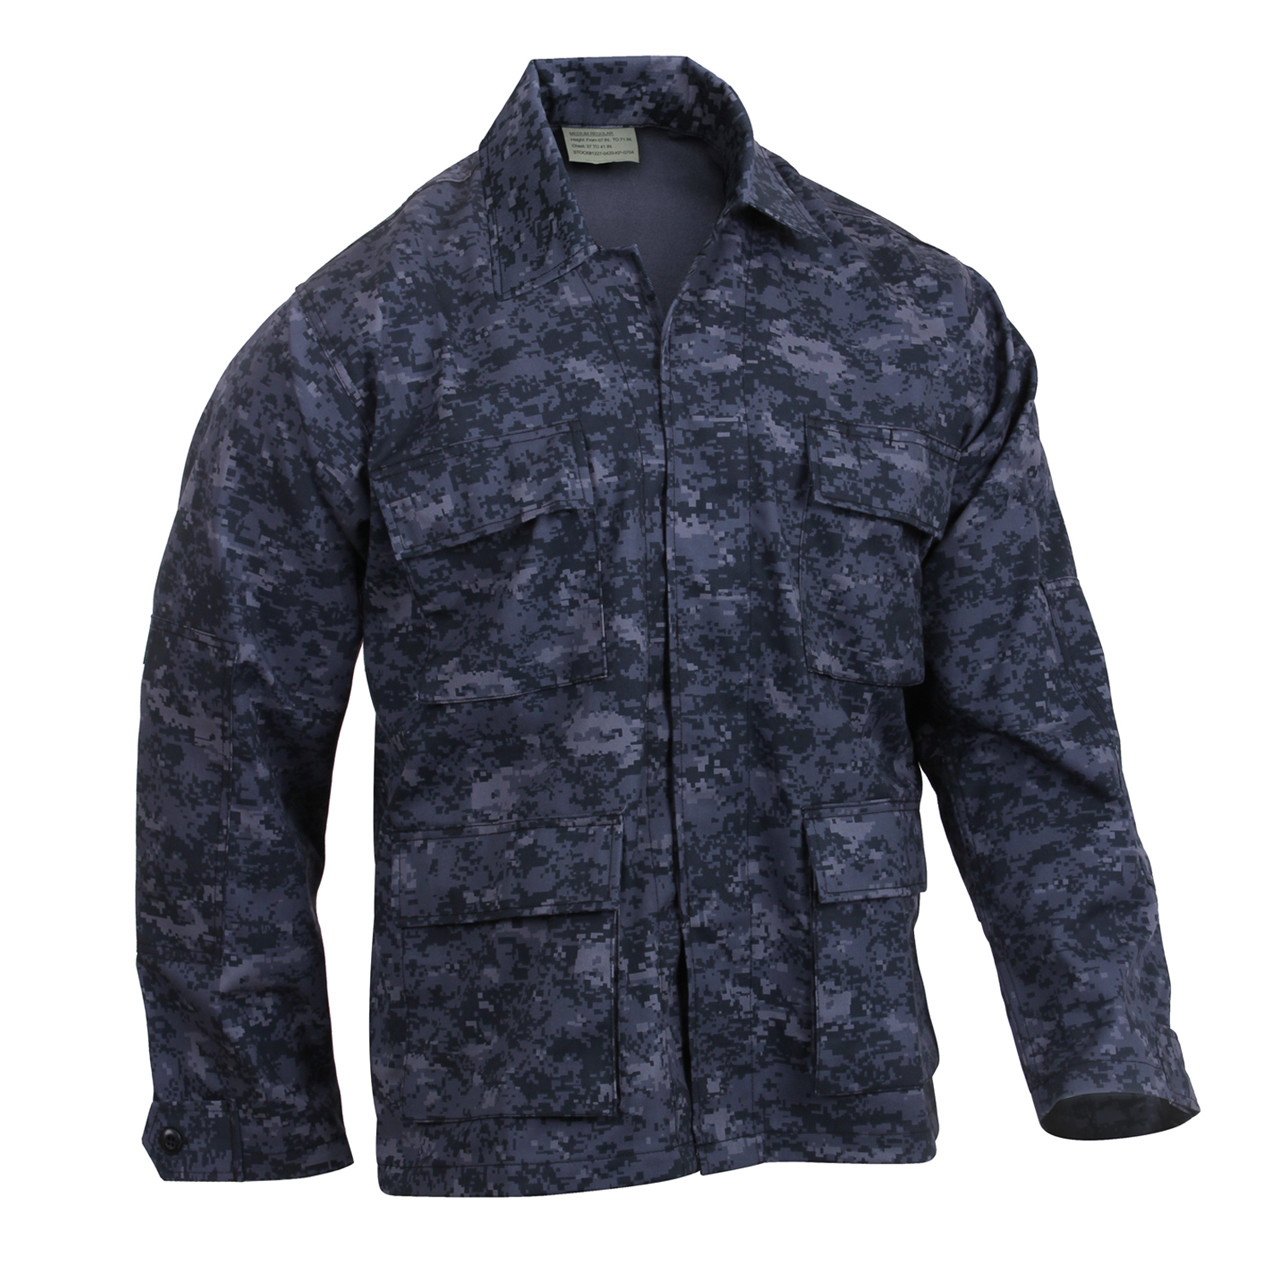 Shop Midnight Digital Camo BDU Jackets - Fatigues Army Navy